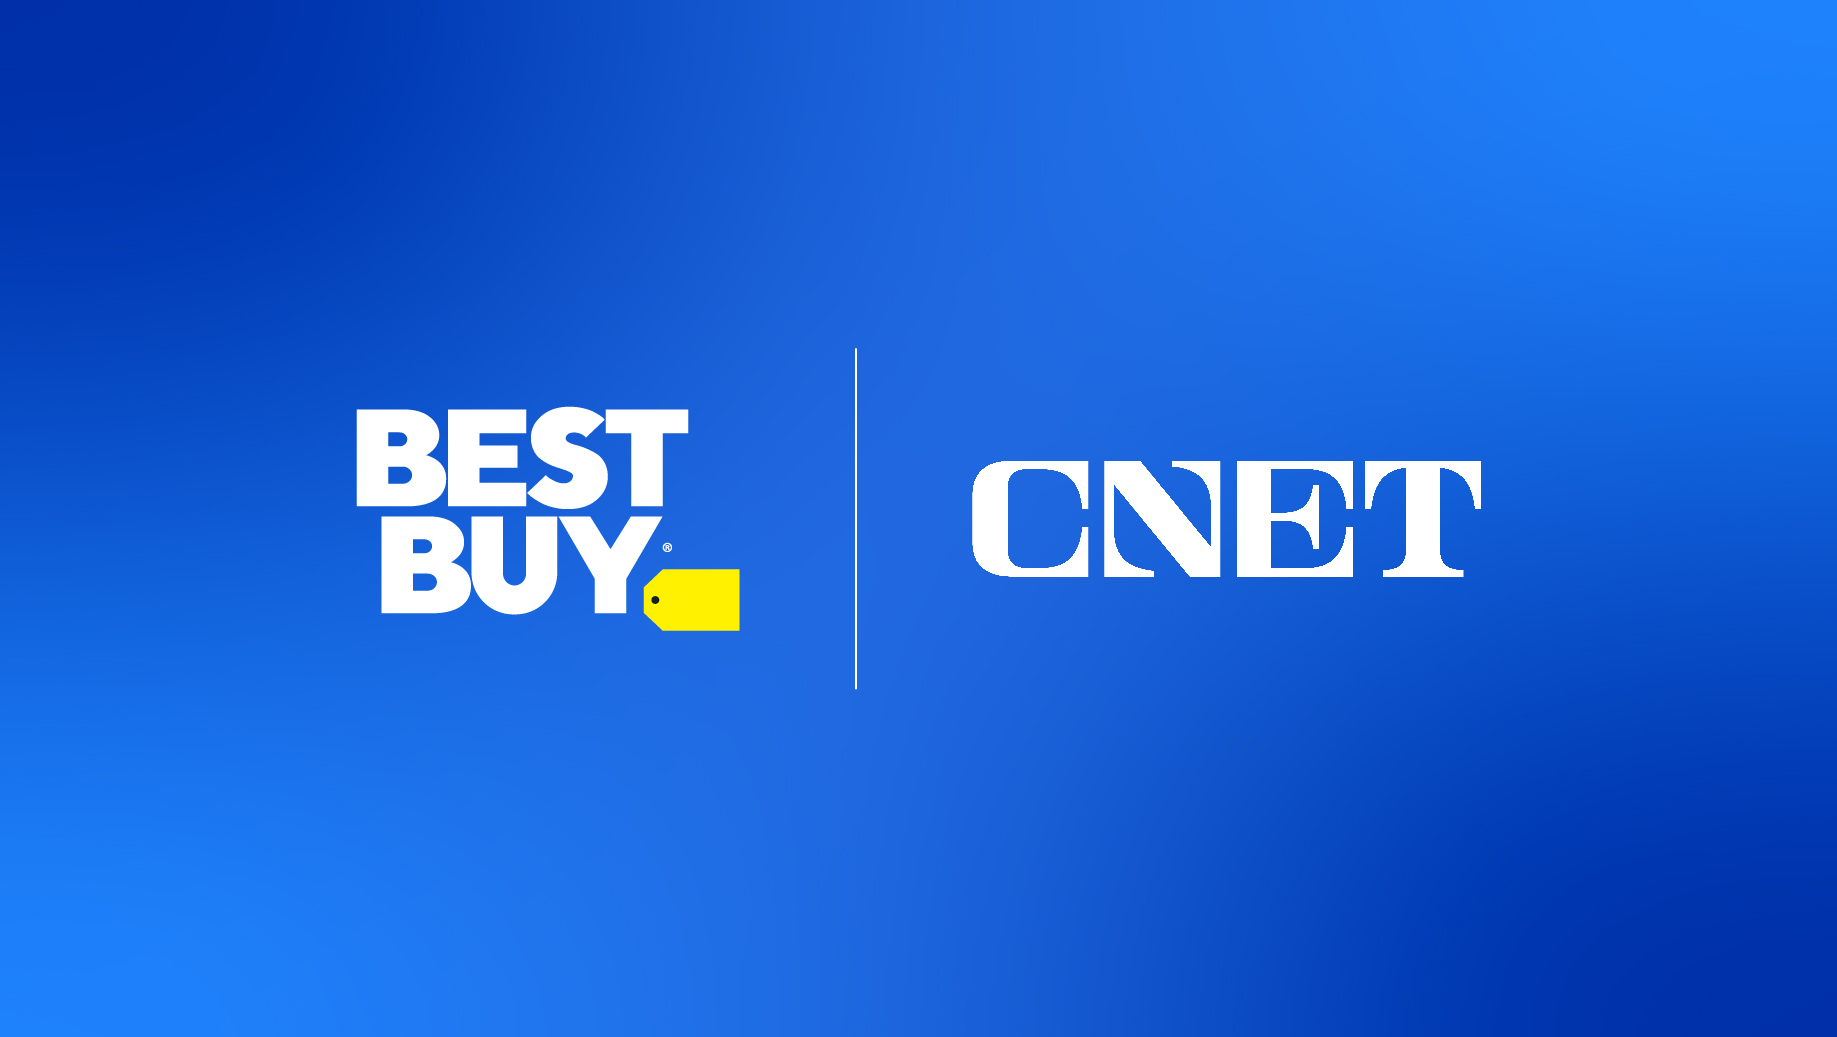 BBY CNET Partnership